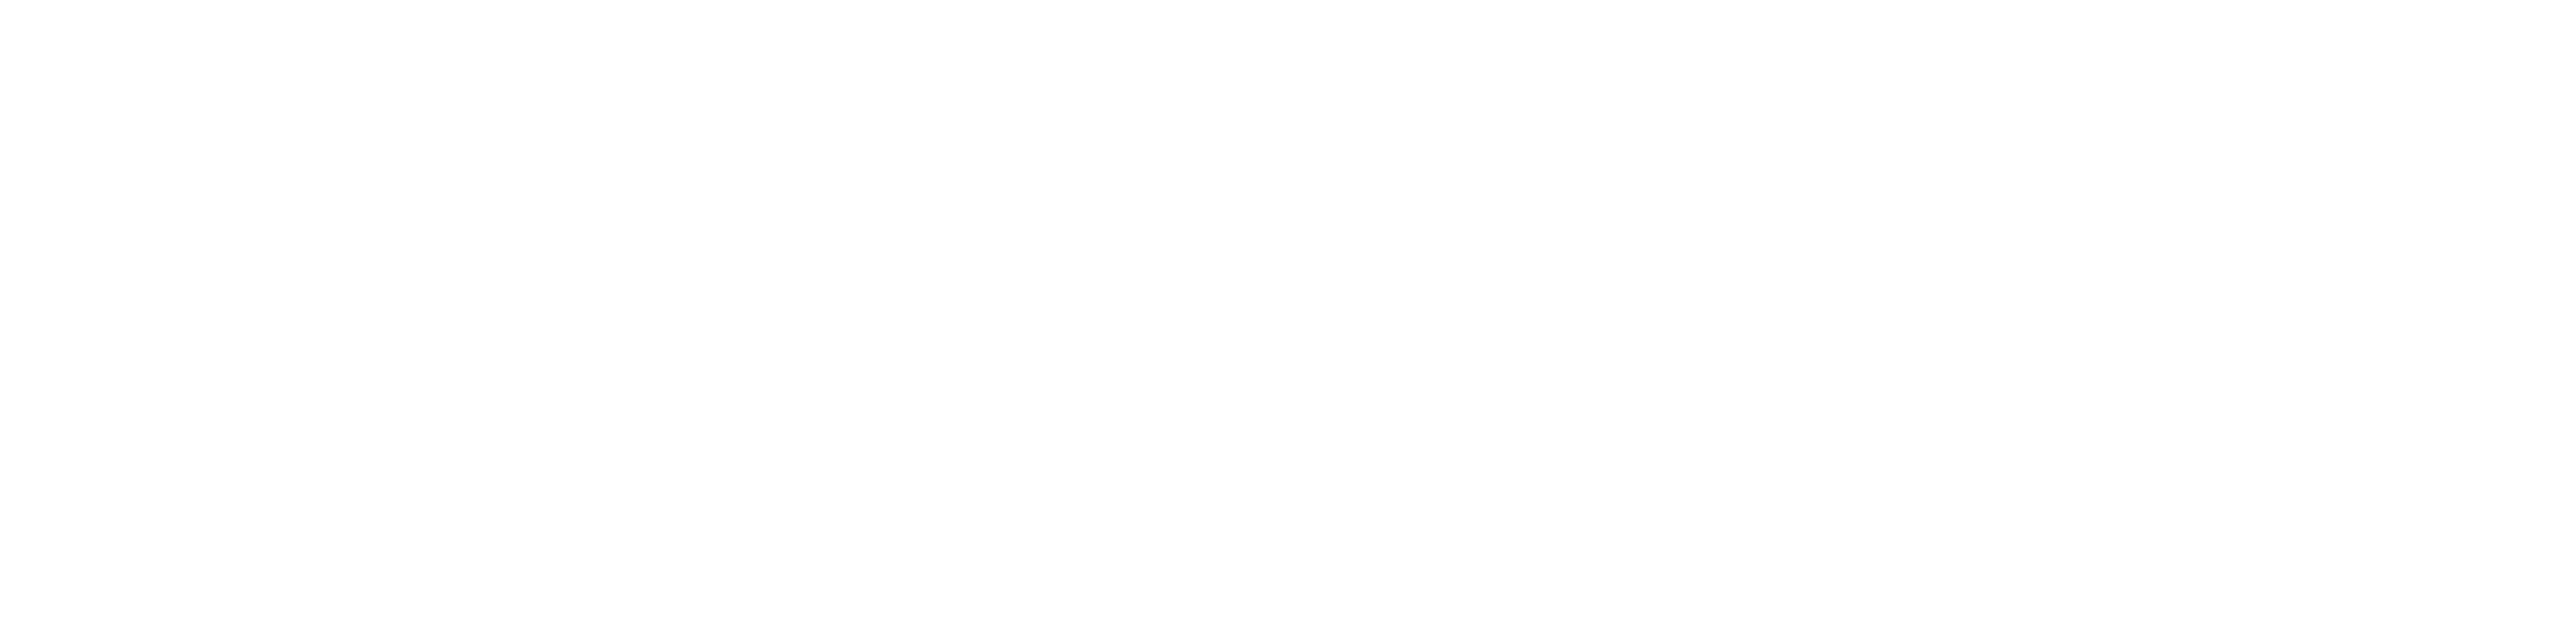 Epiction Interactive